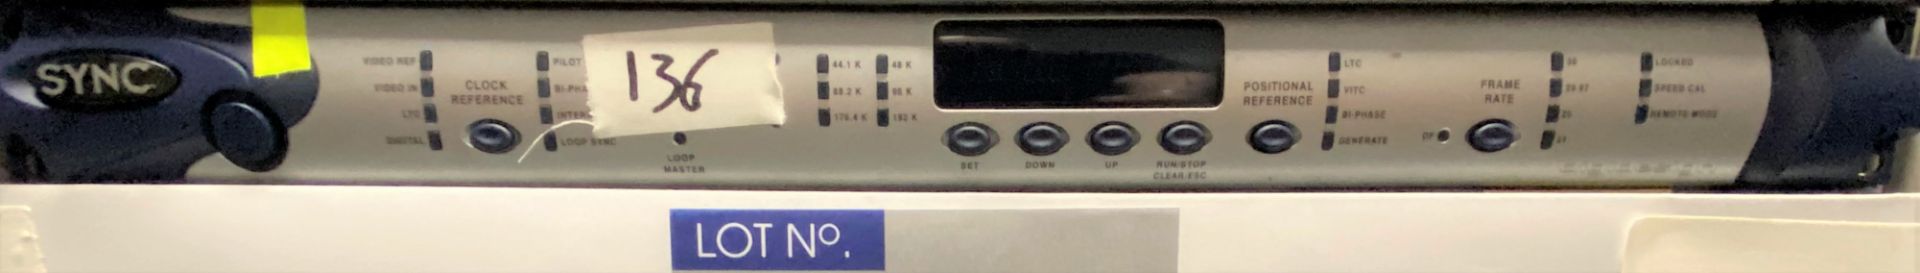 A digidesign SYNC I/O Multi Purpose Synchronization Peripheral (previously in use).